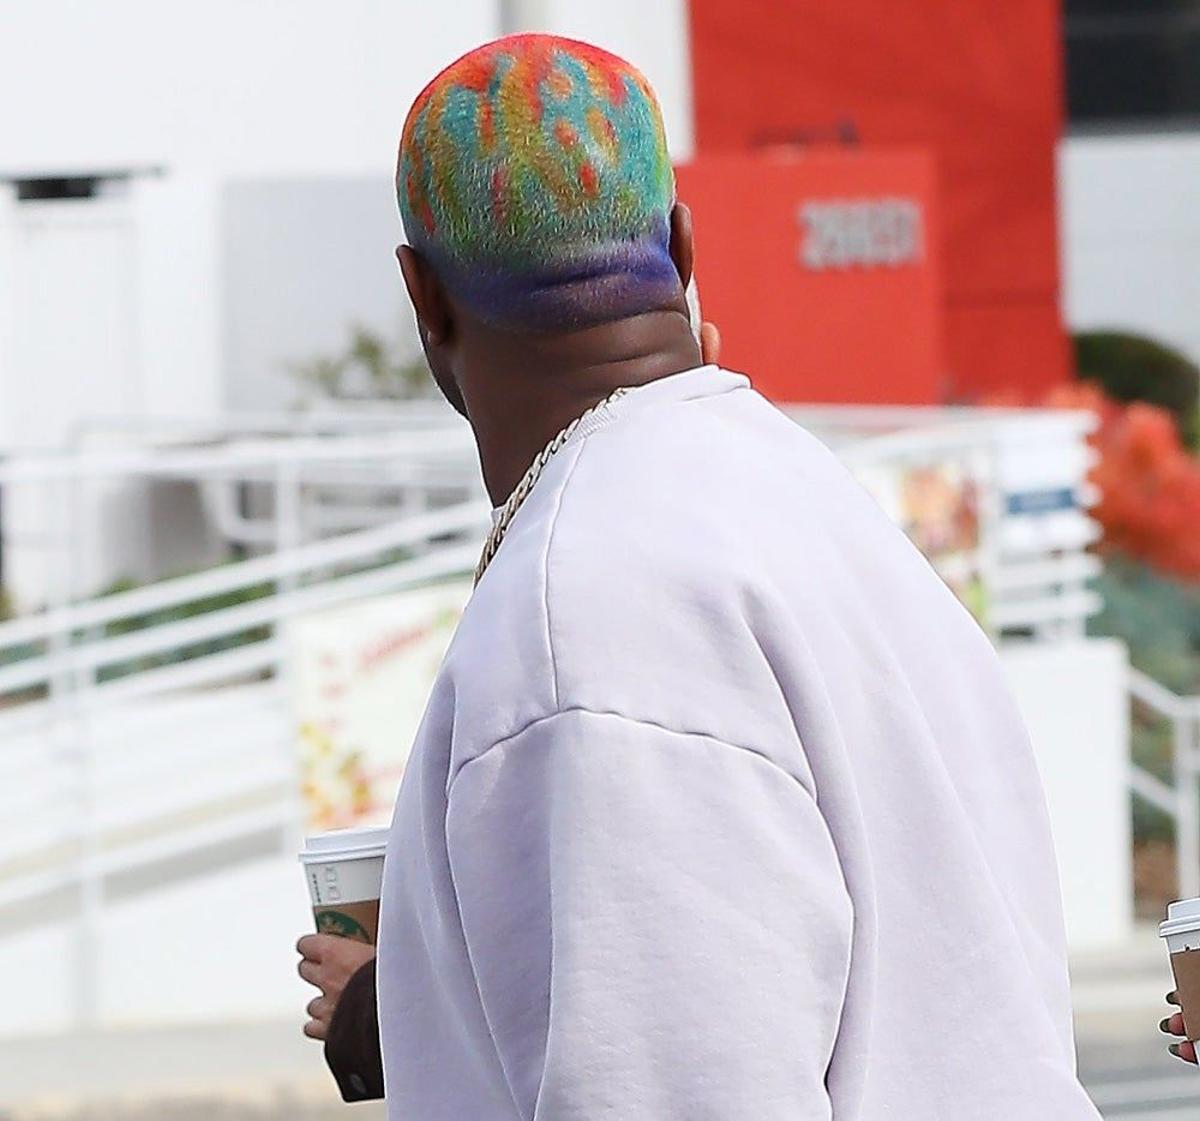 La colorida cabeza de Kanye West